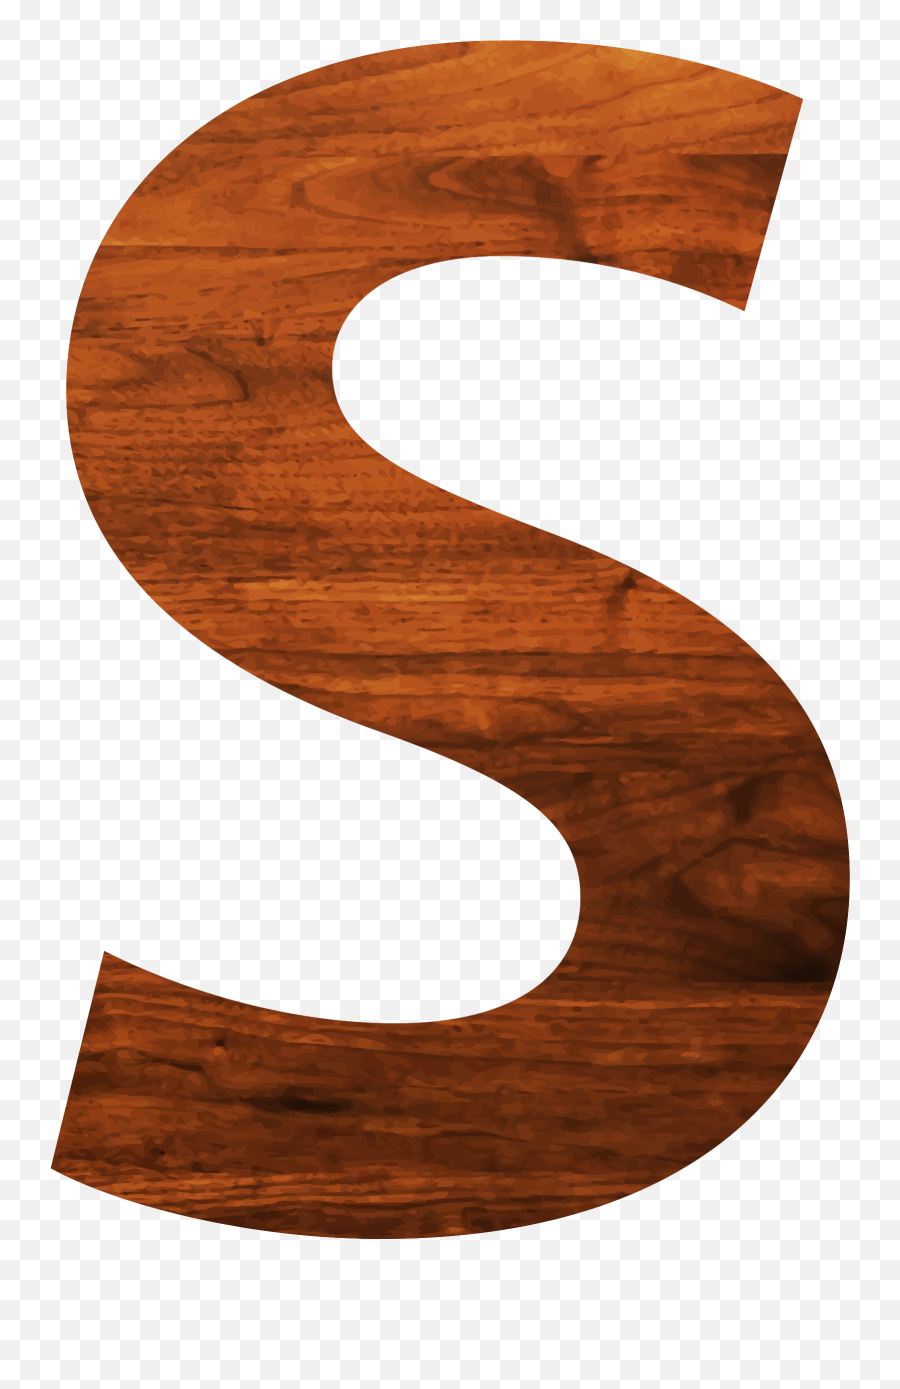 Wood Grain Hardwood Wood Stain Plywood - Wood Texture In Letter Emoji,Wood Grain Clipart